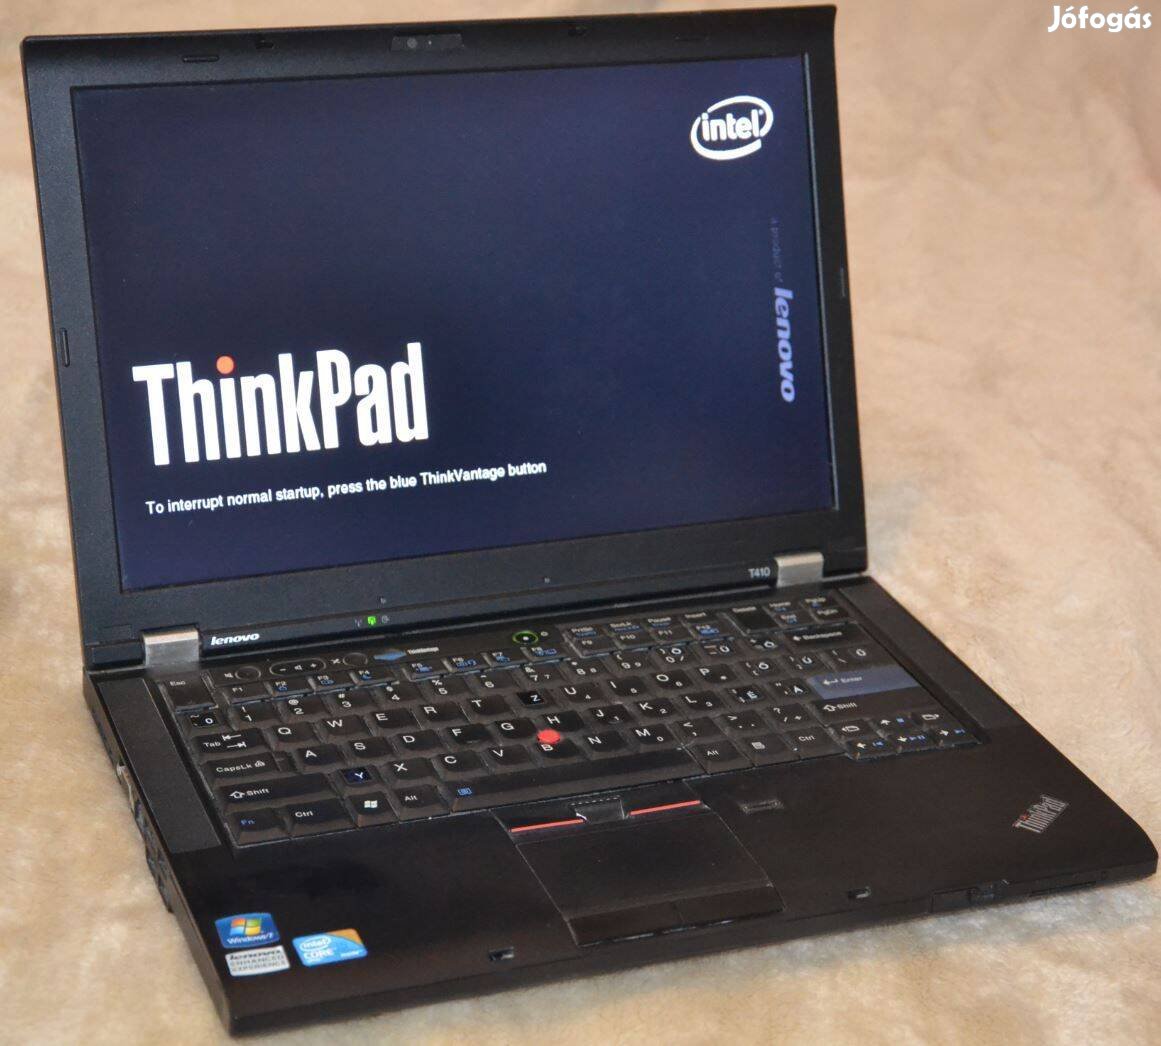 Lenovo Thinkpad T410 i5, 8GB RAM, 240GB SSD - Debrecen - 40.000